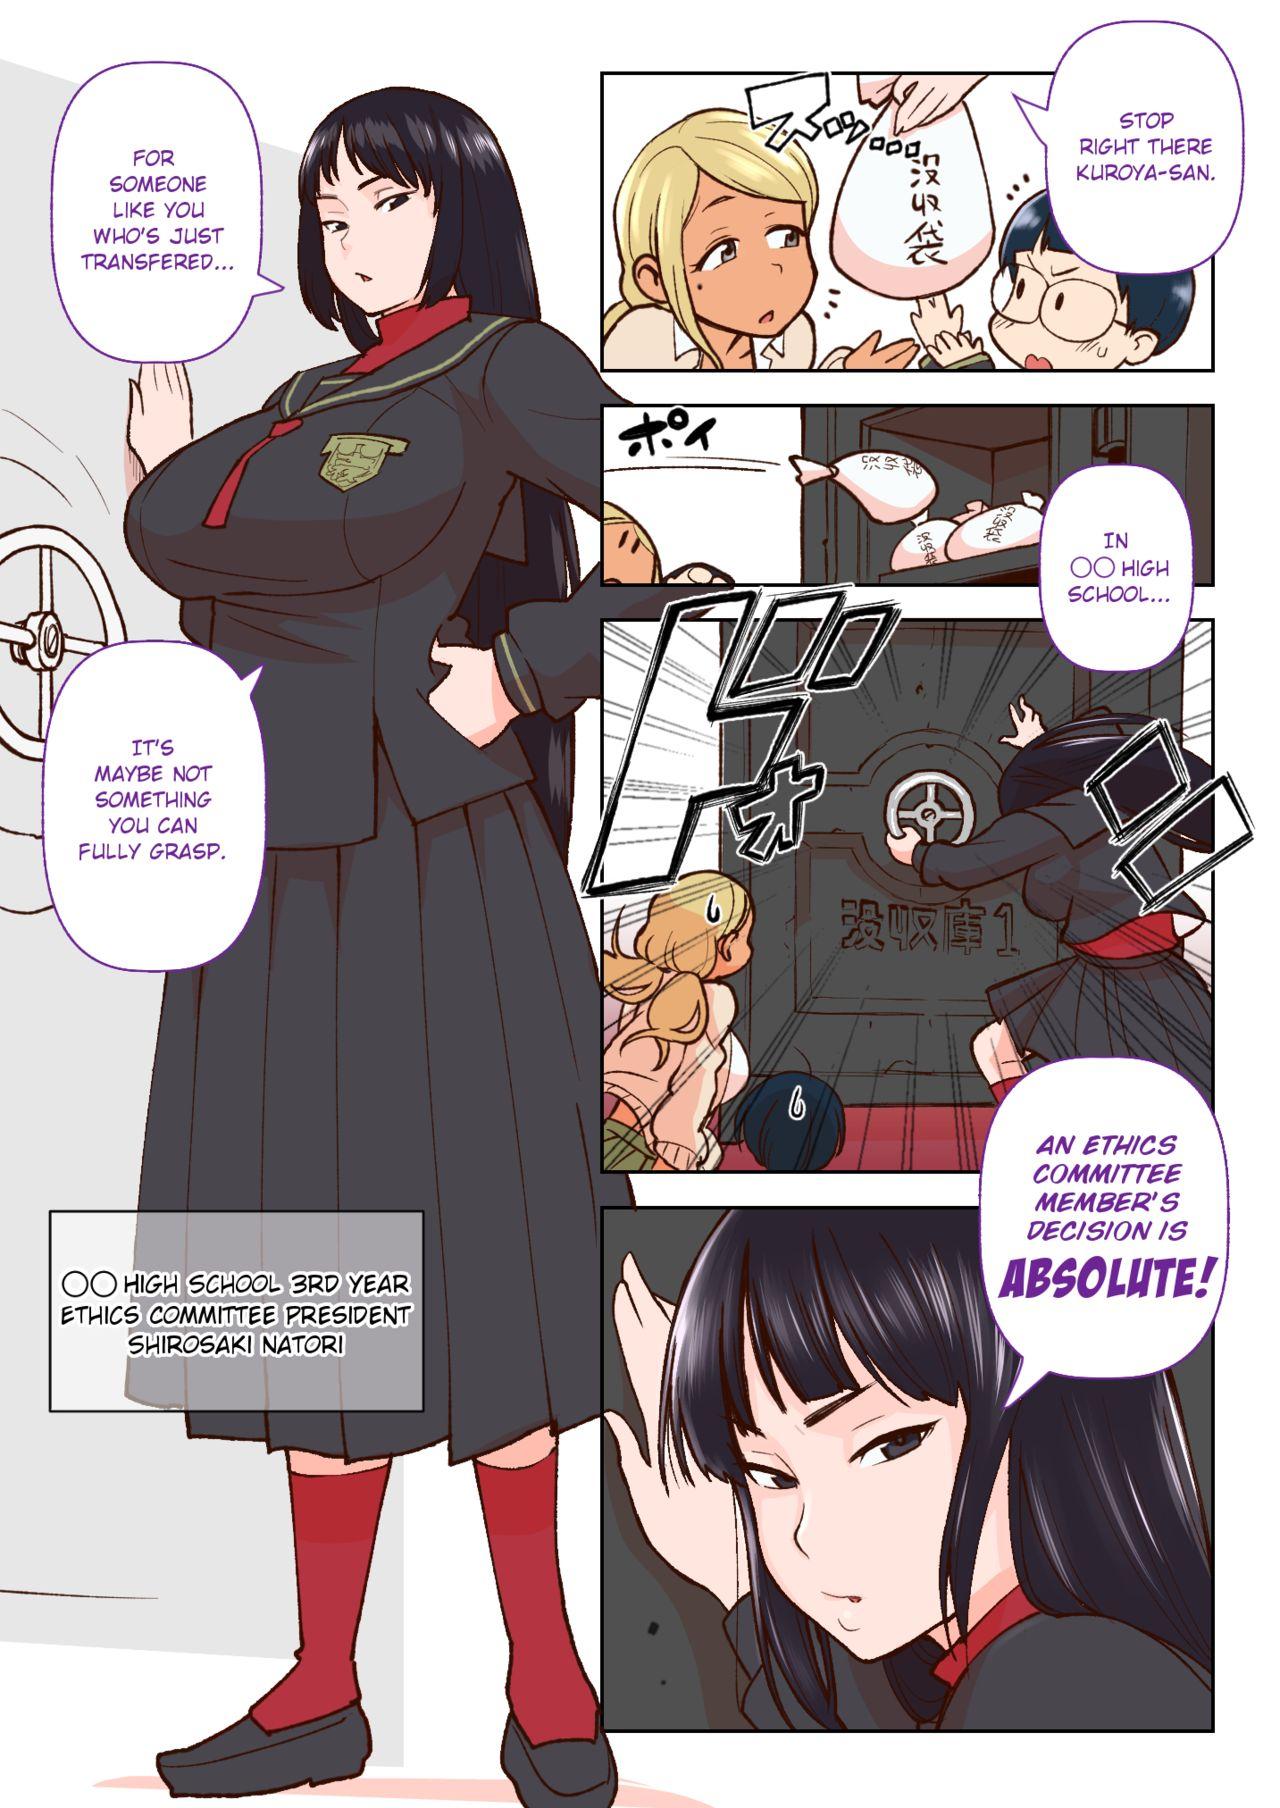 Safada Kuro Gal VS Fuuki Iin - Black gal VS Prefect Tits - Page 4